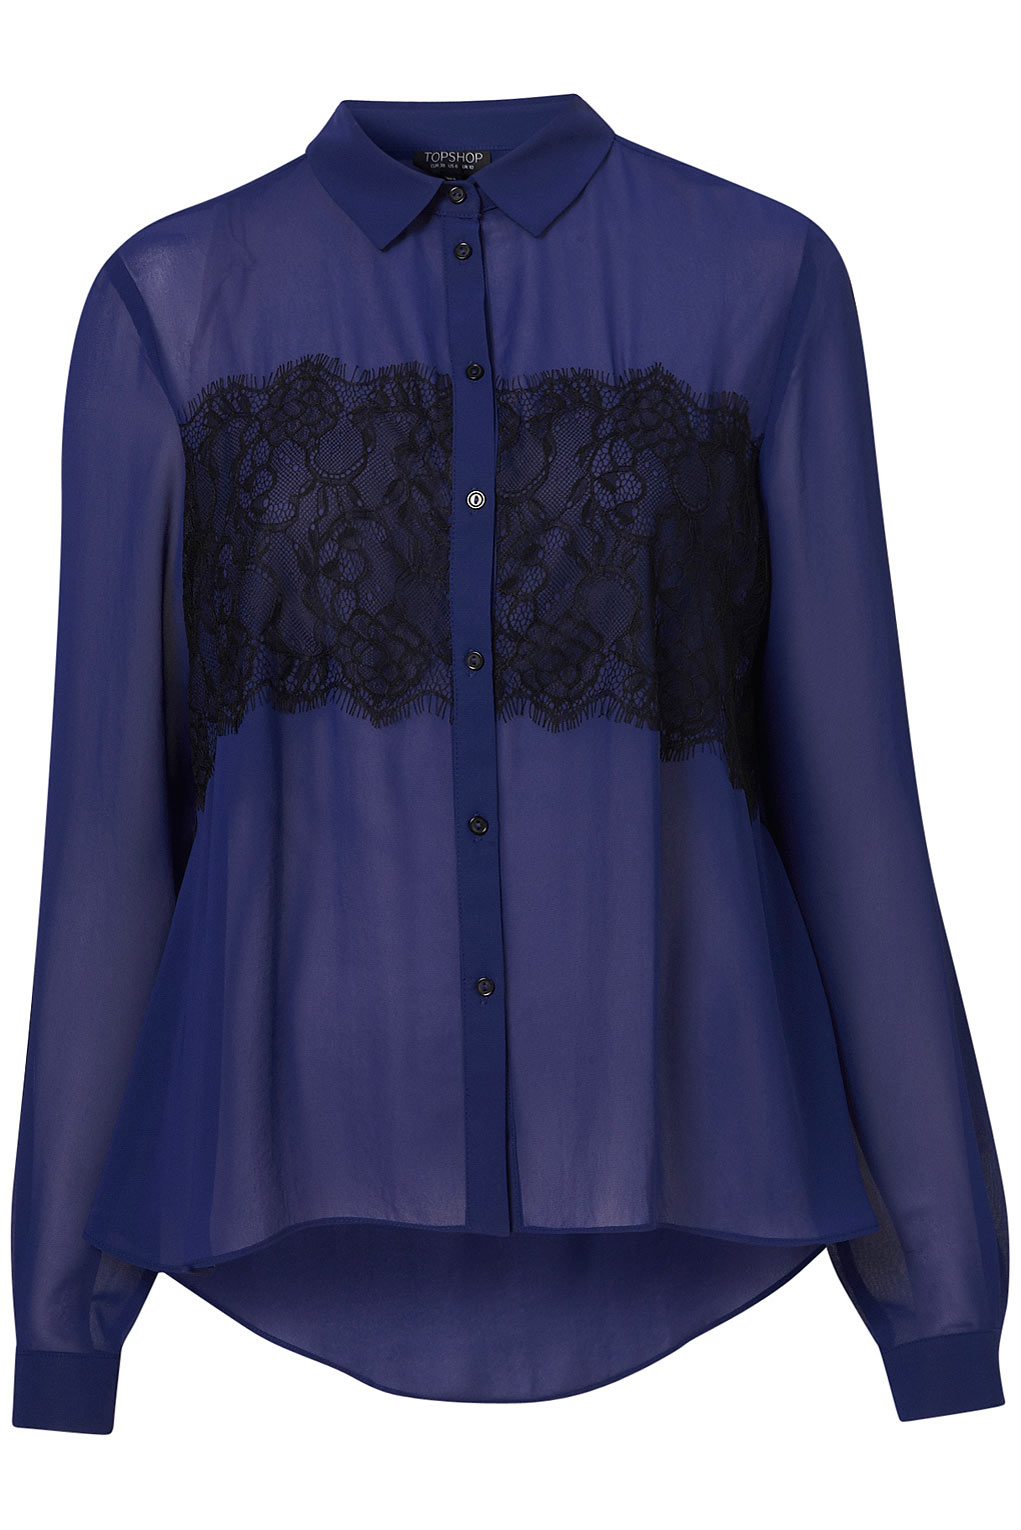 Topshop Lace Applique Shirt in Blue | Lyst